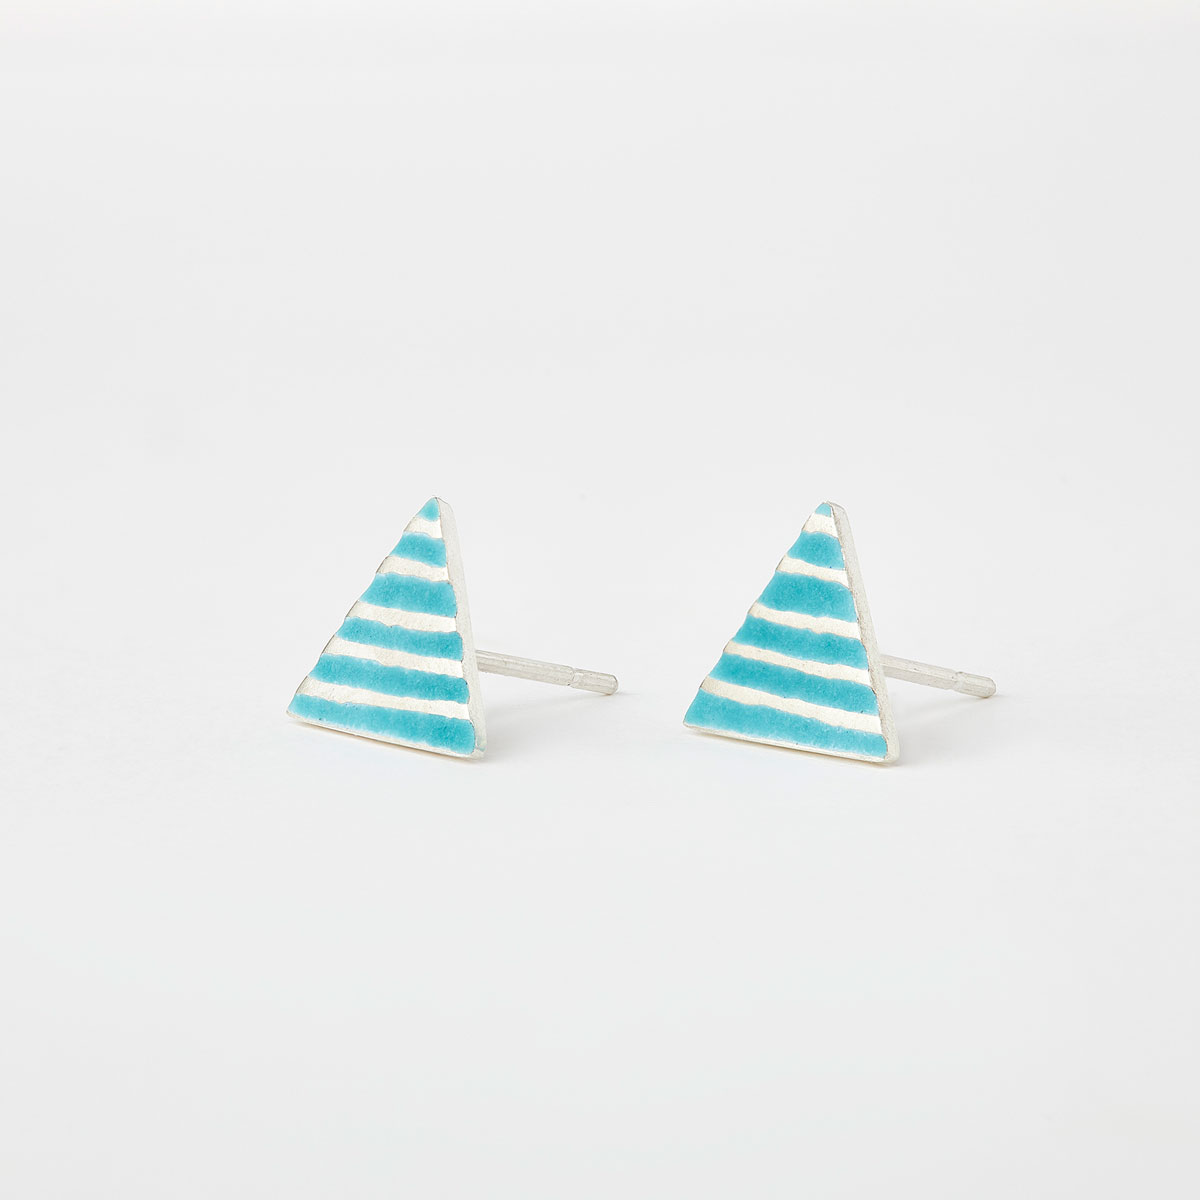 'Weave' Turquoise Triangle Stud Earrings